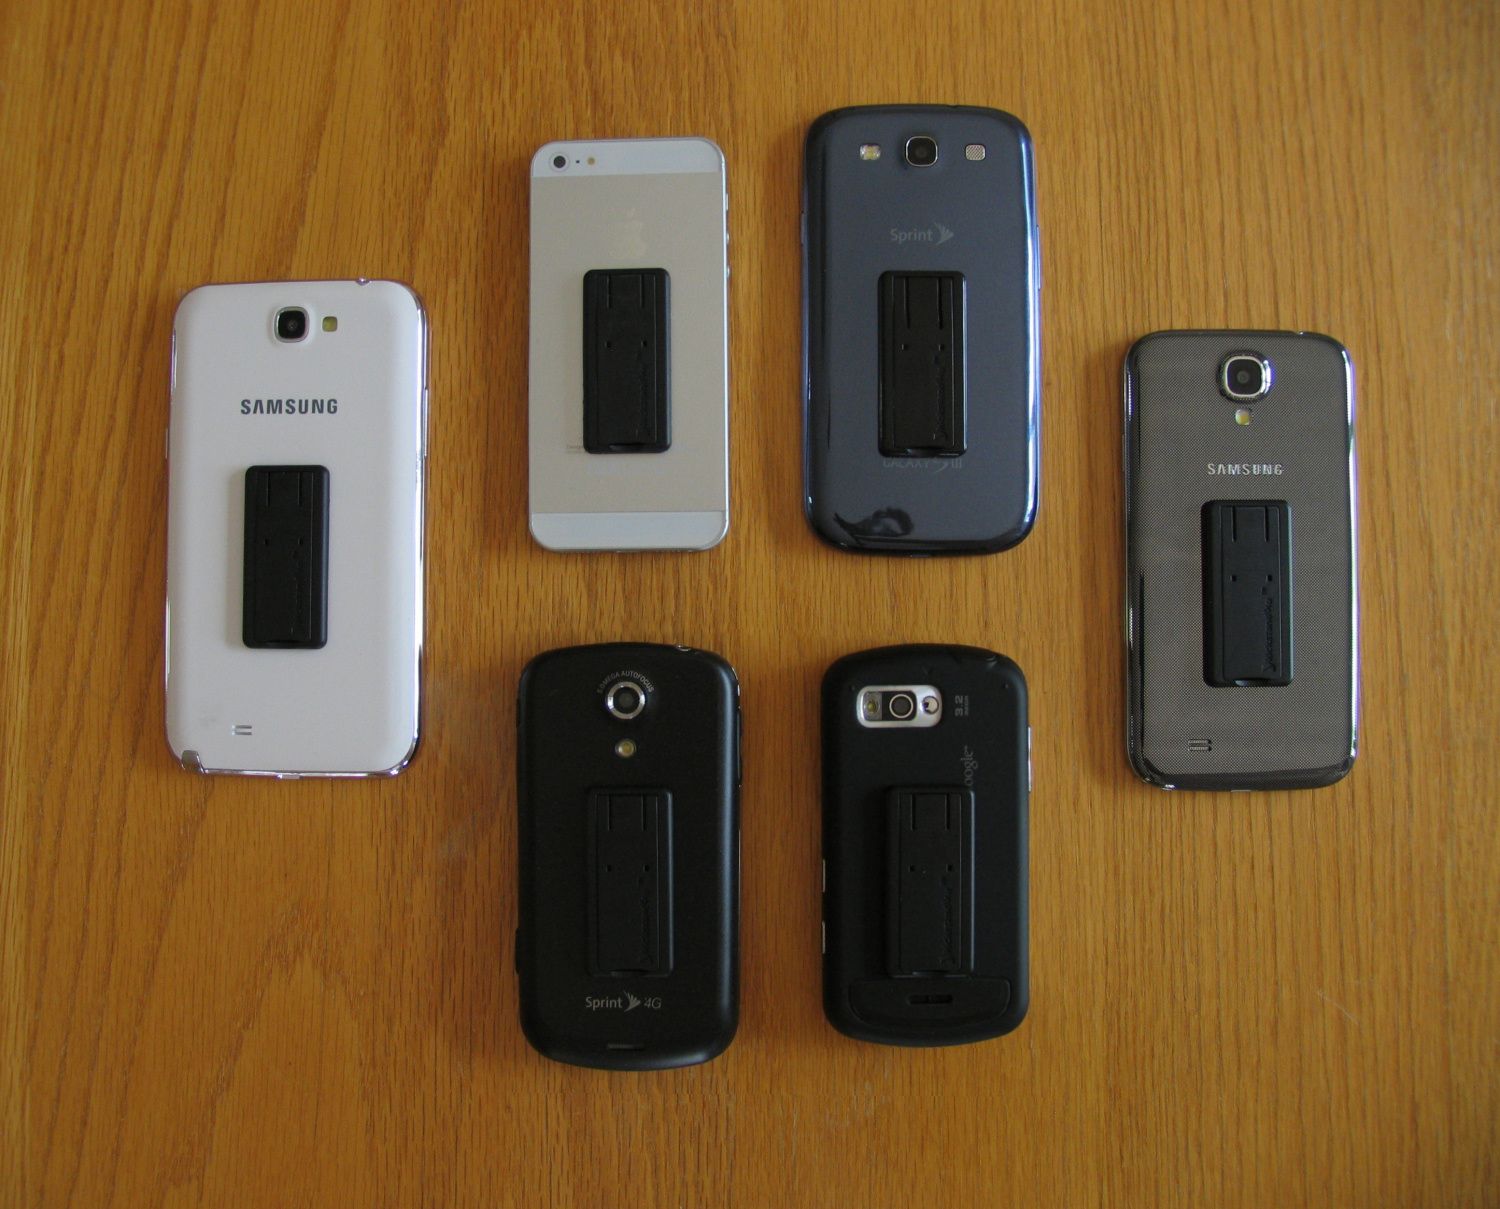 kickstand4u on various mobile phones